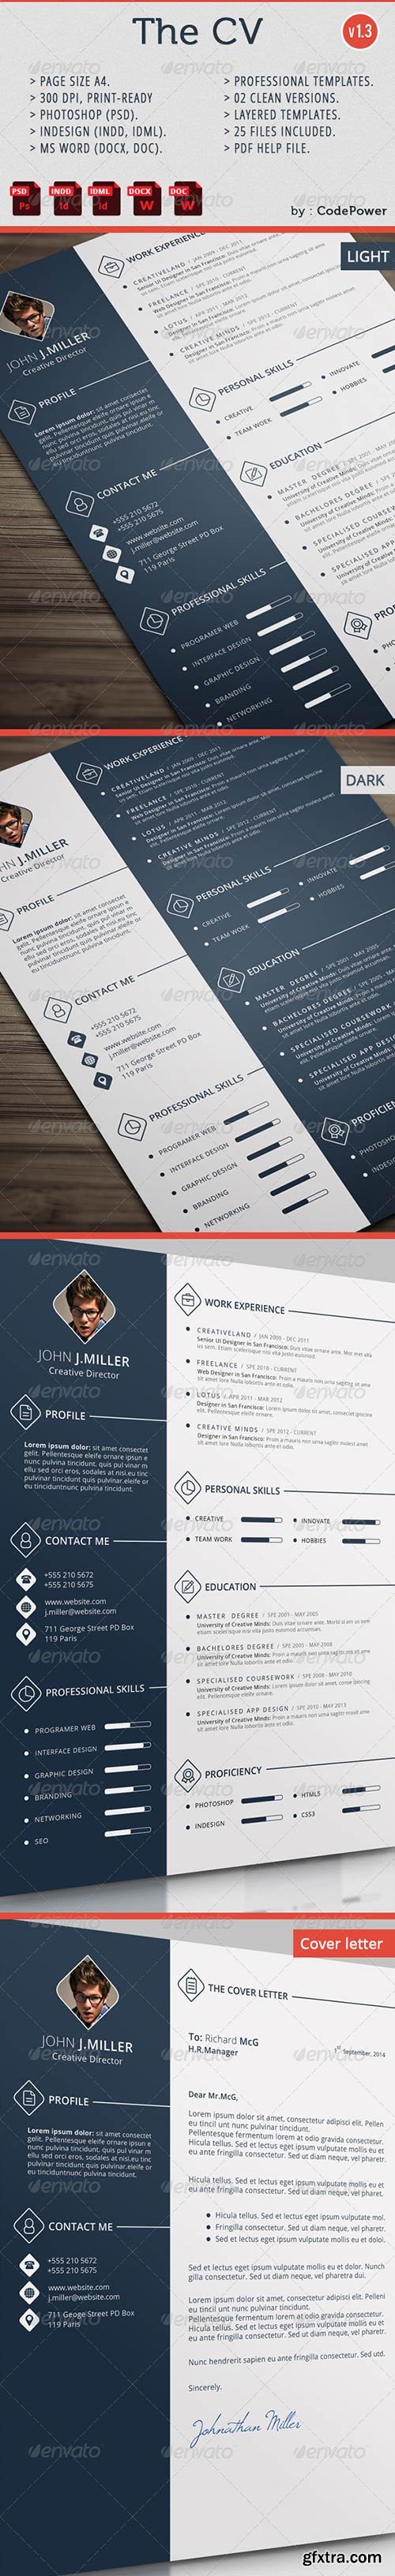 GraphicRiver - The CV